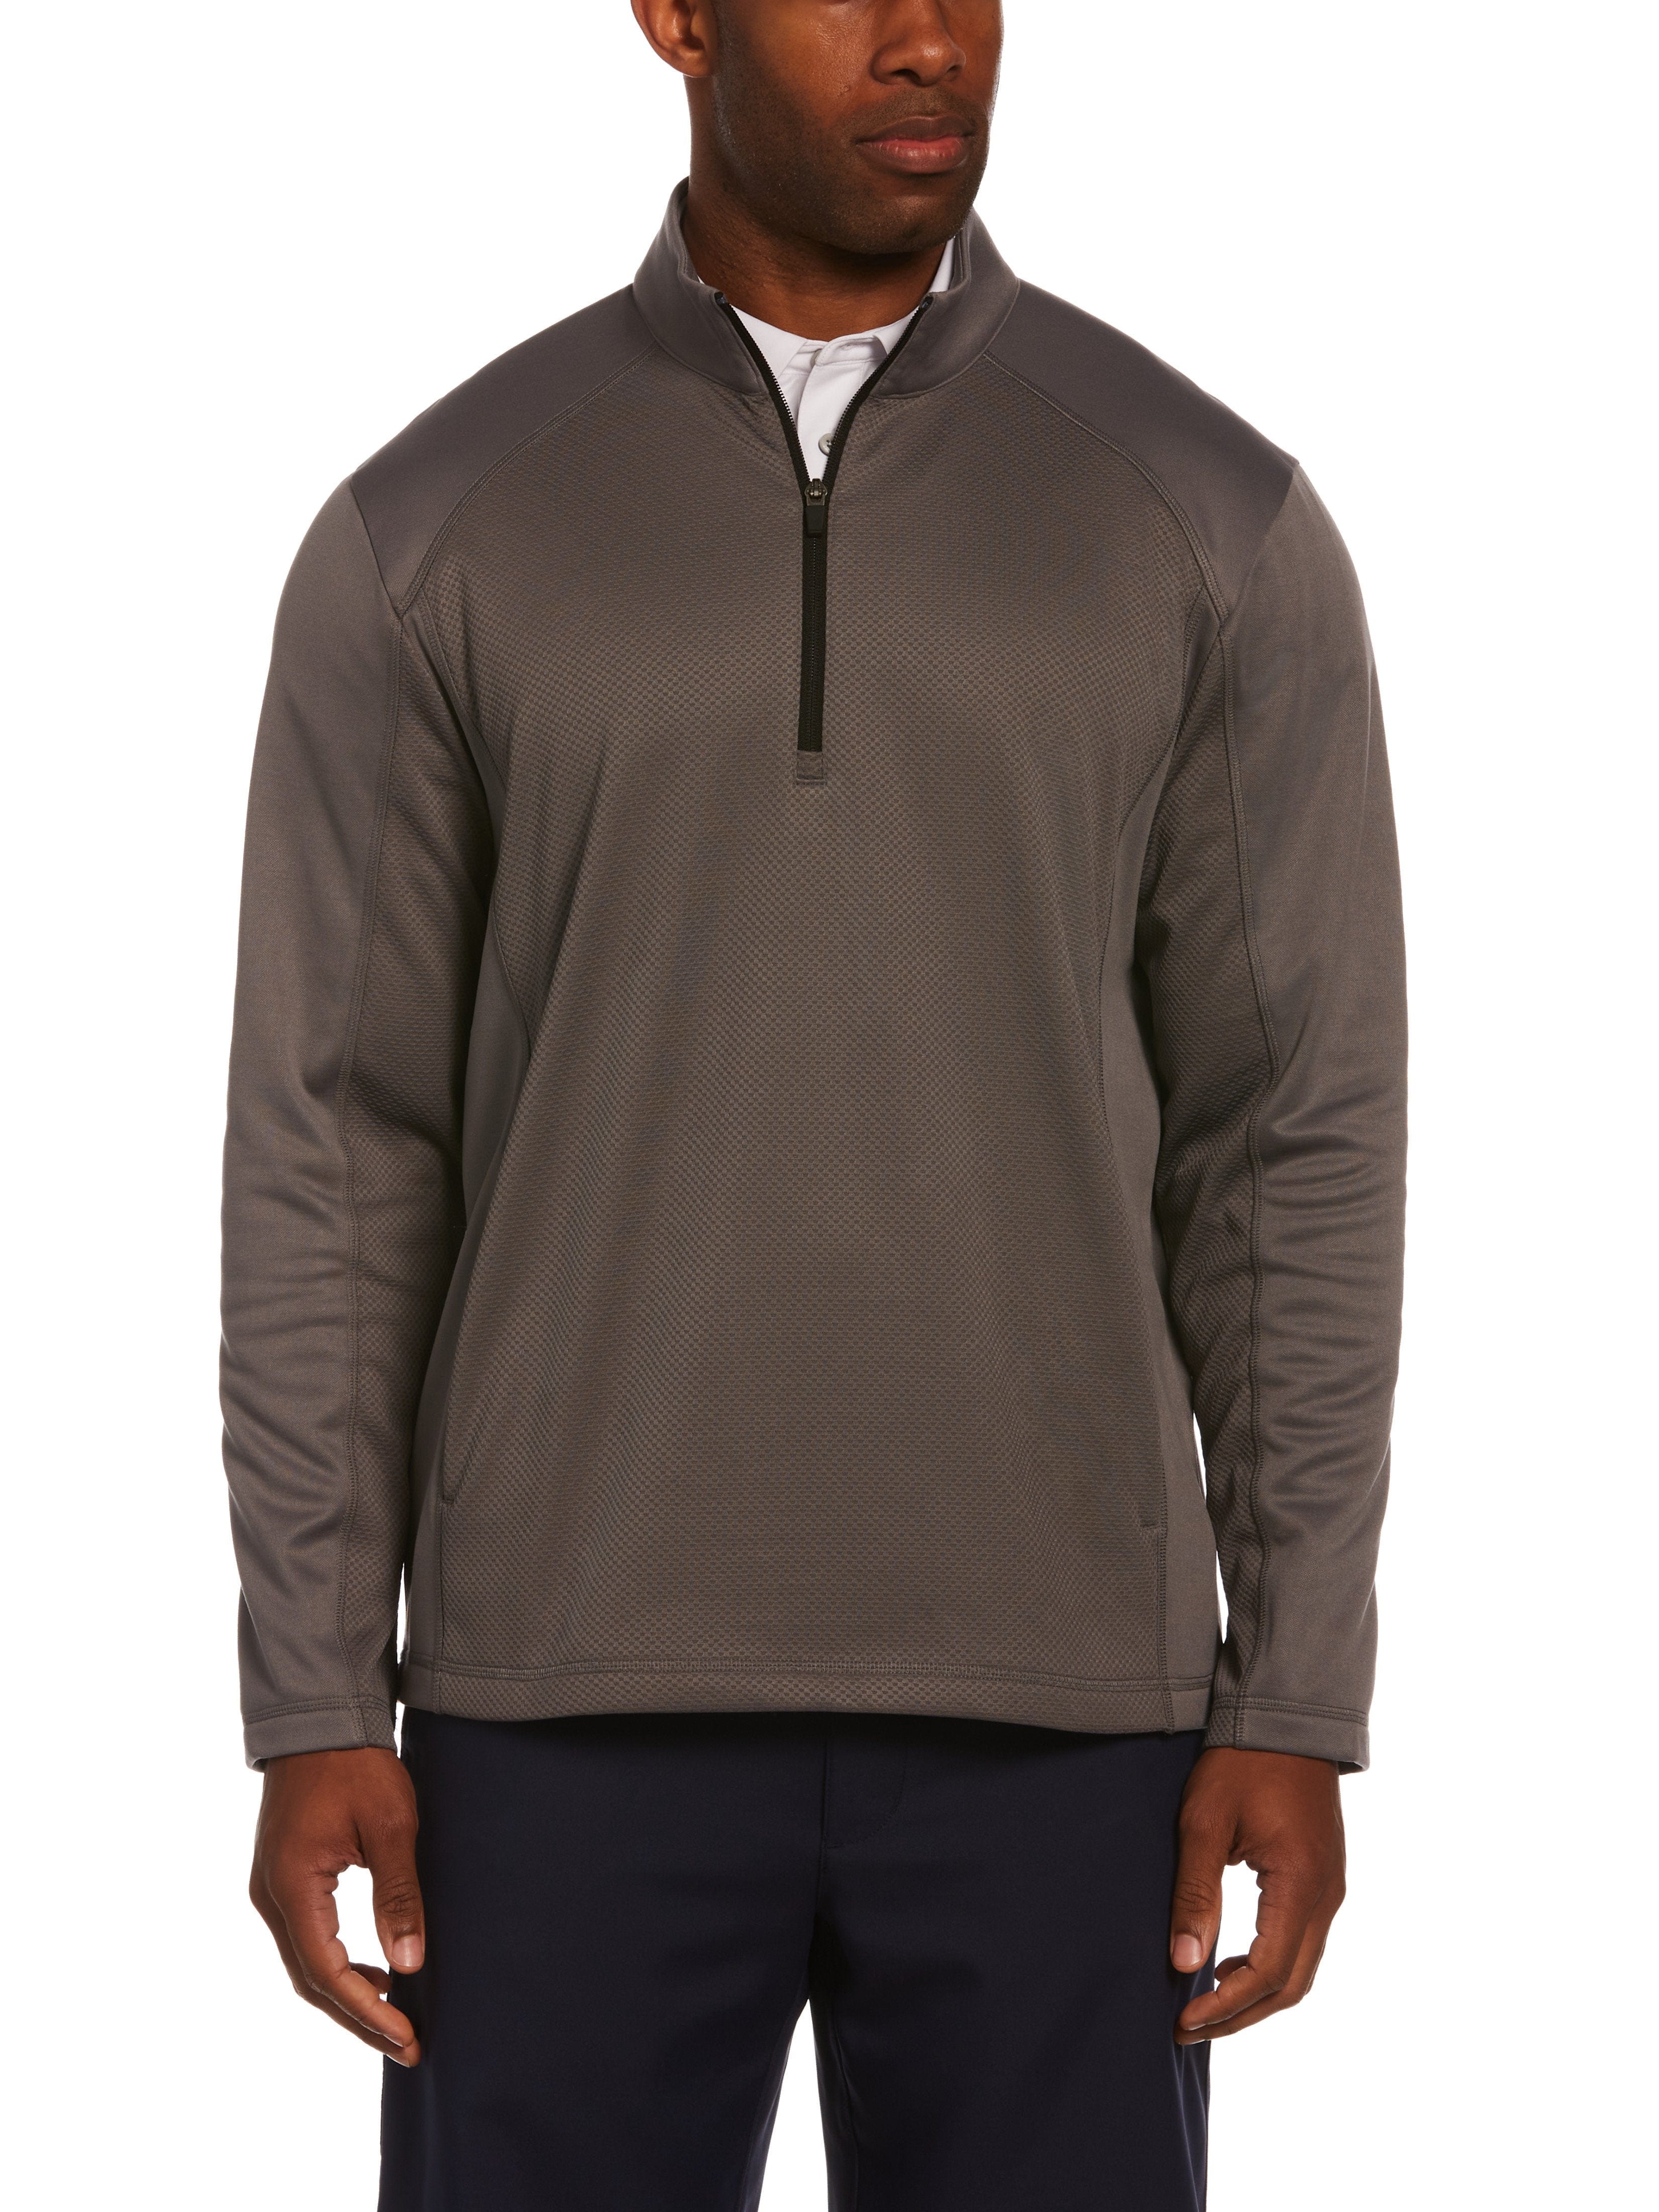 PGA TOUR Apparel Mens Mixed Texture Fleece 1/4 Zip Golf Jacket Top, Size Large, Quiet Shade Gray, 100% Polyester | Golf Apparel Shop